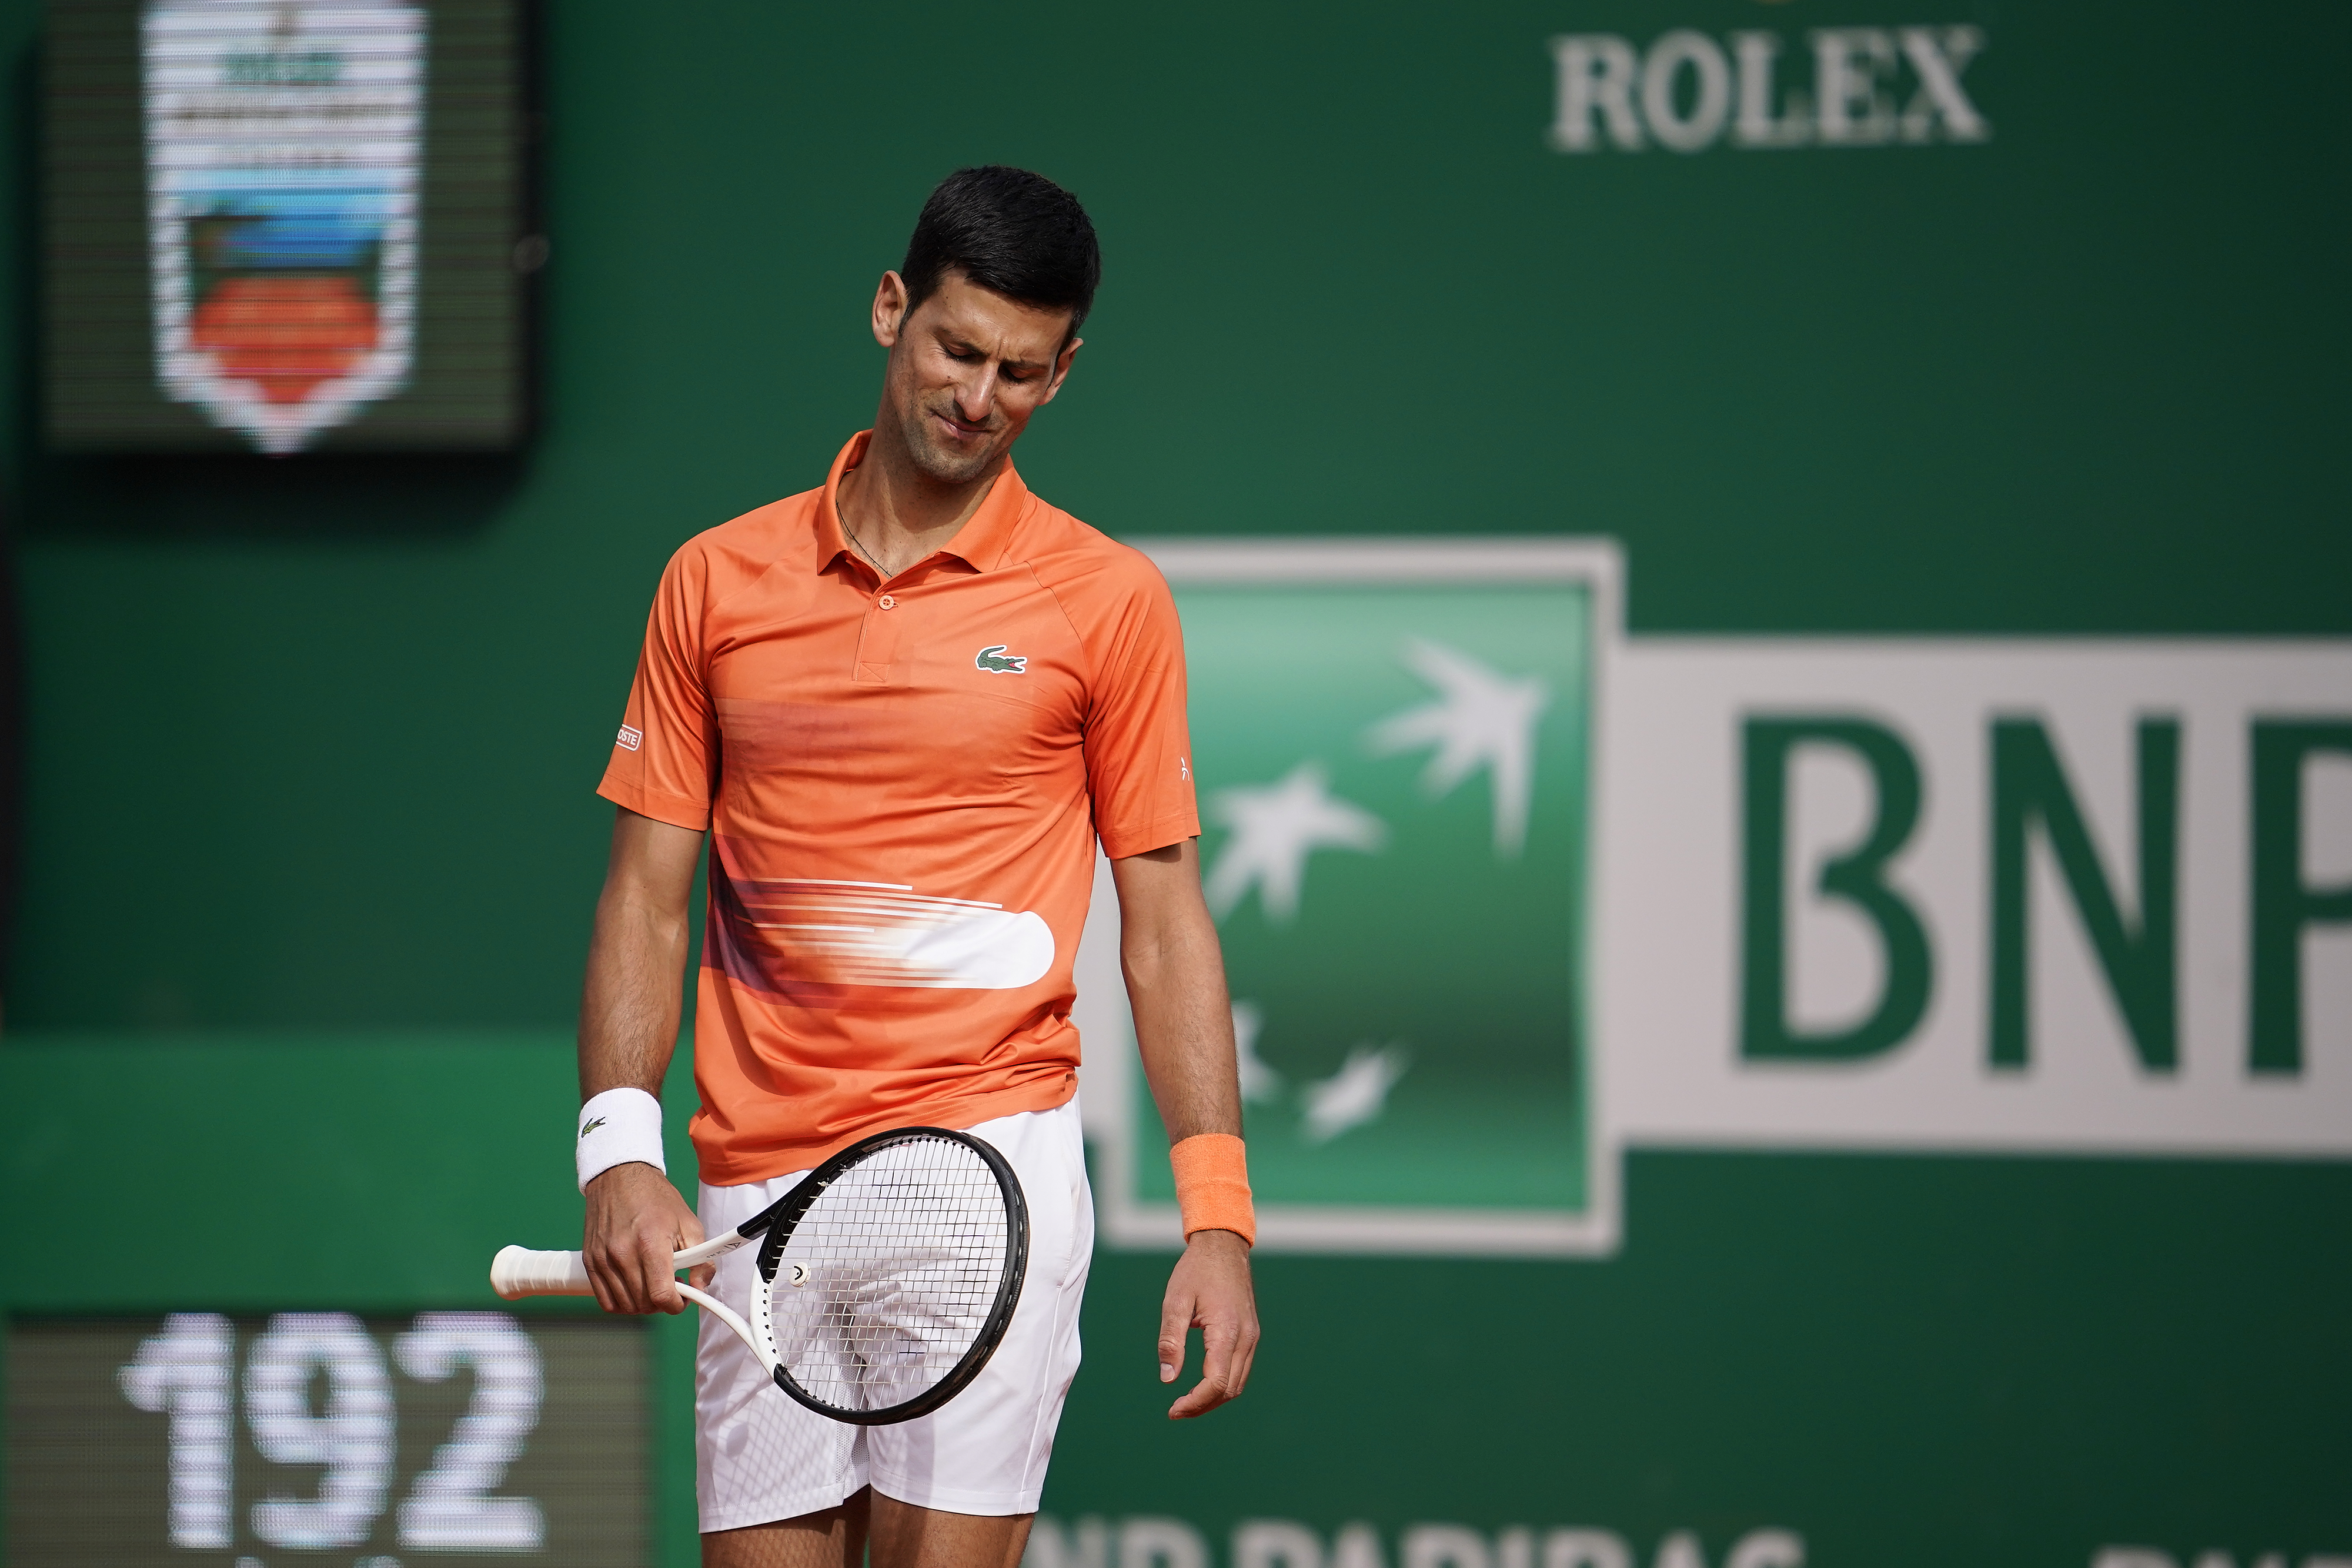 Novak Djokovic loses in first match since February | CNN